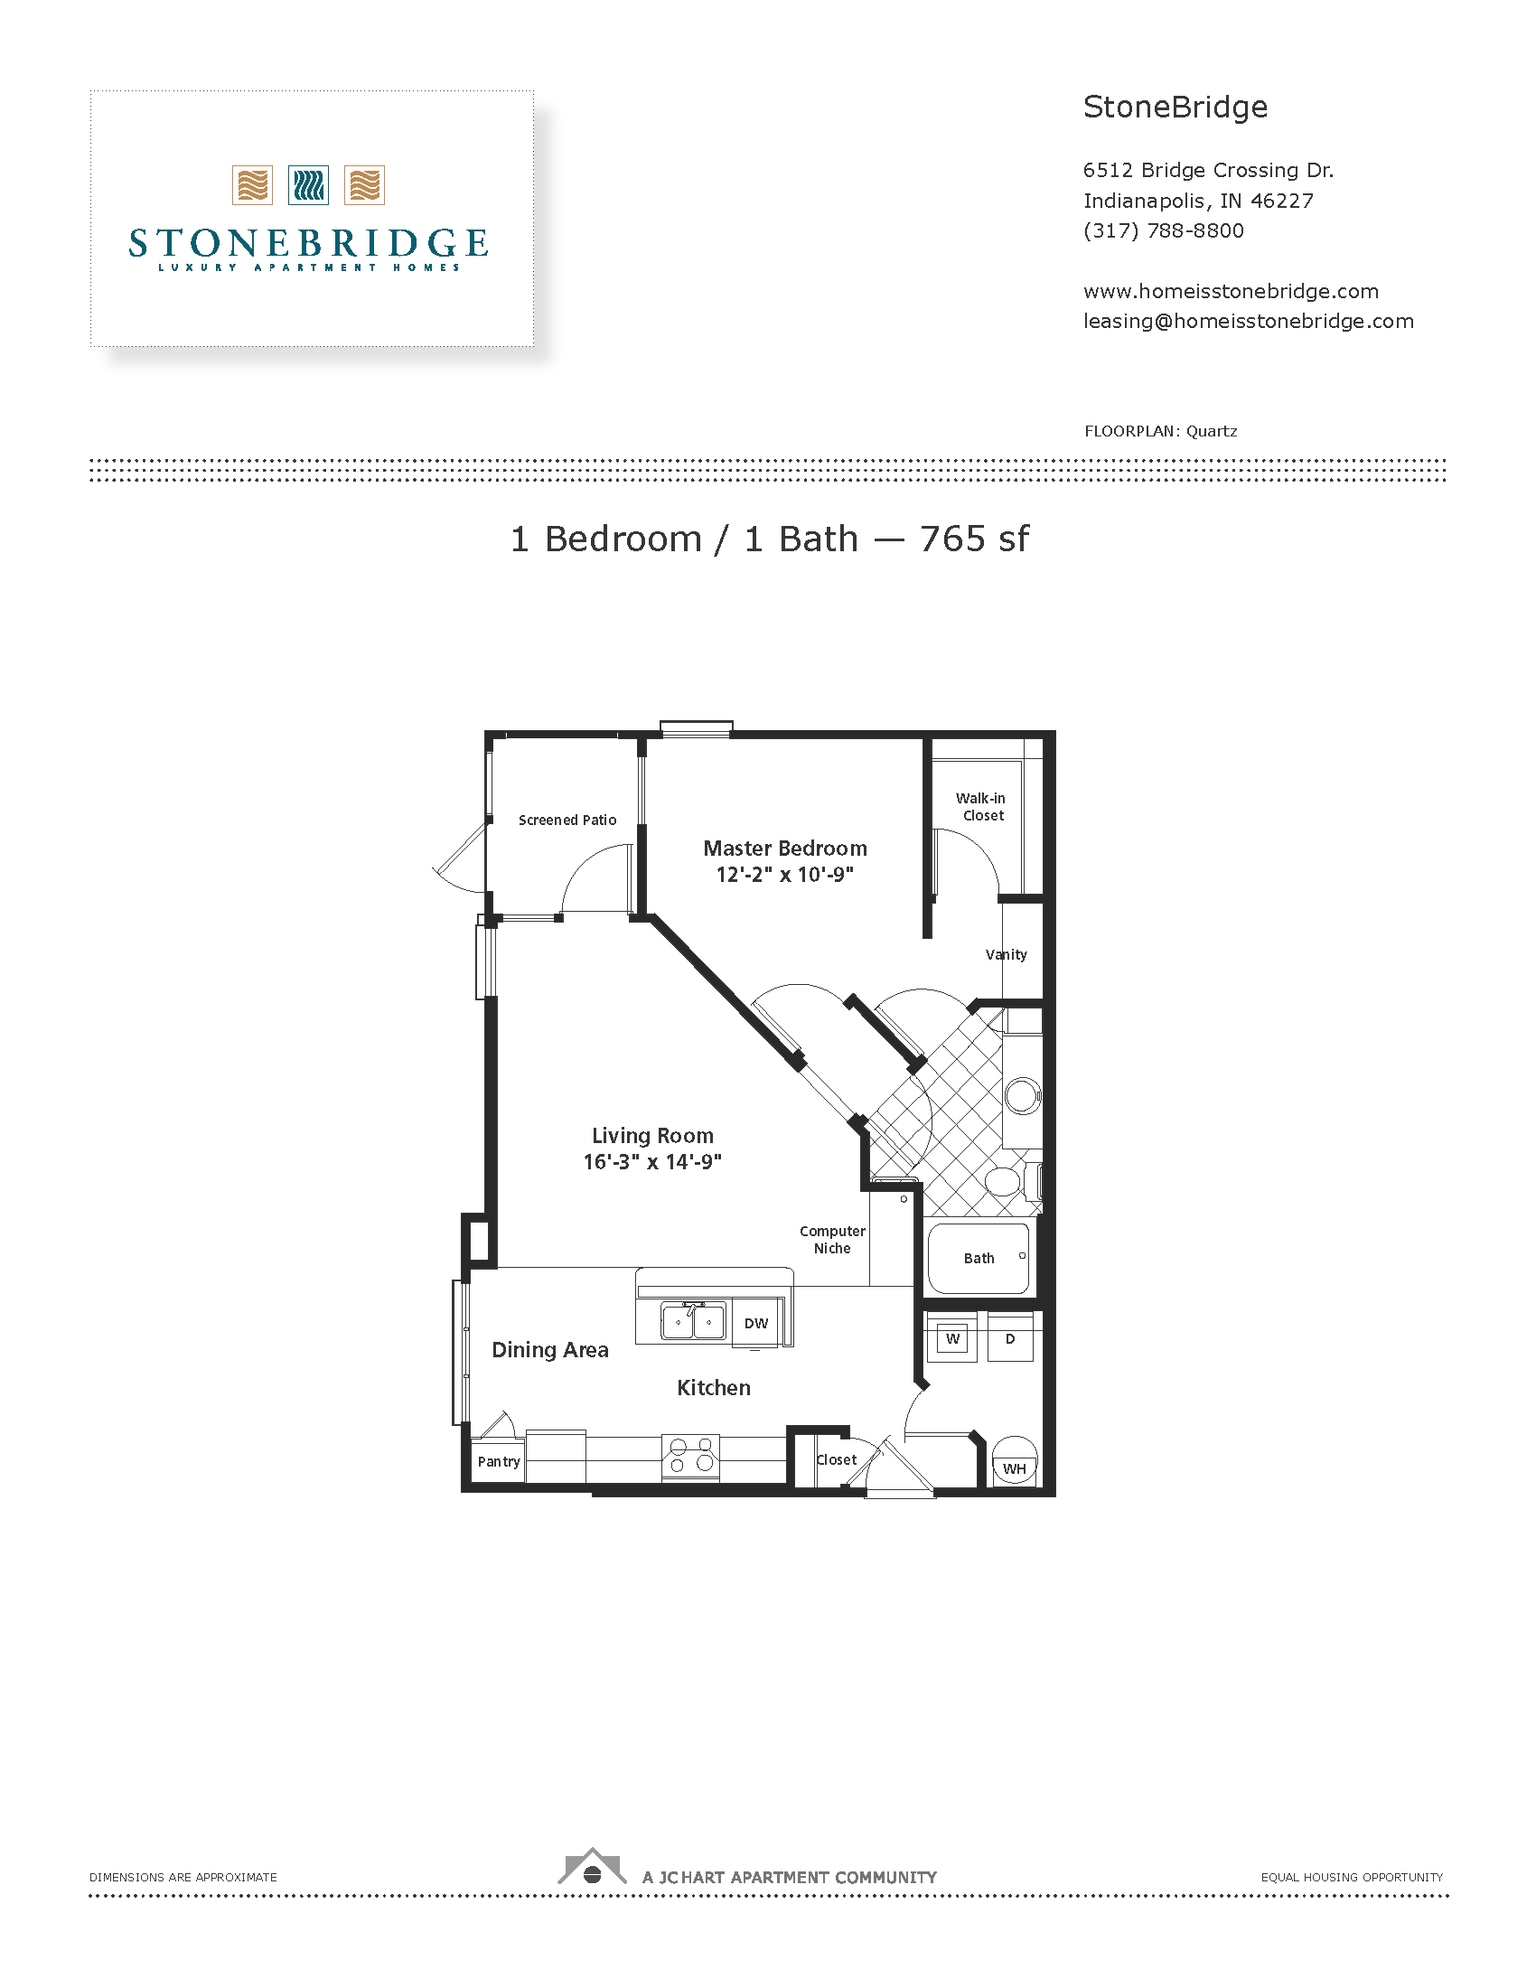 Quartz floor plan - StoneBridge Apartment Homes _ Indianapolis apartments_preview.png